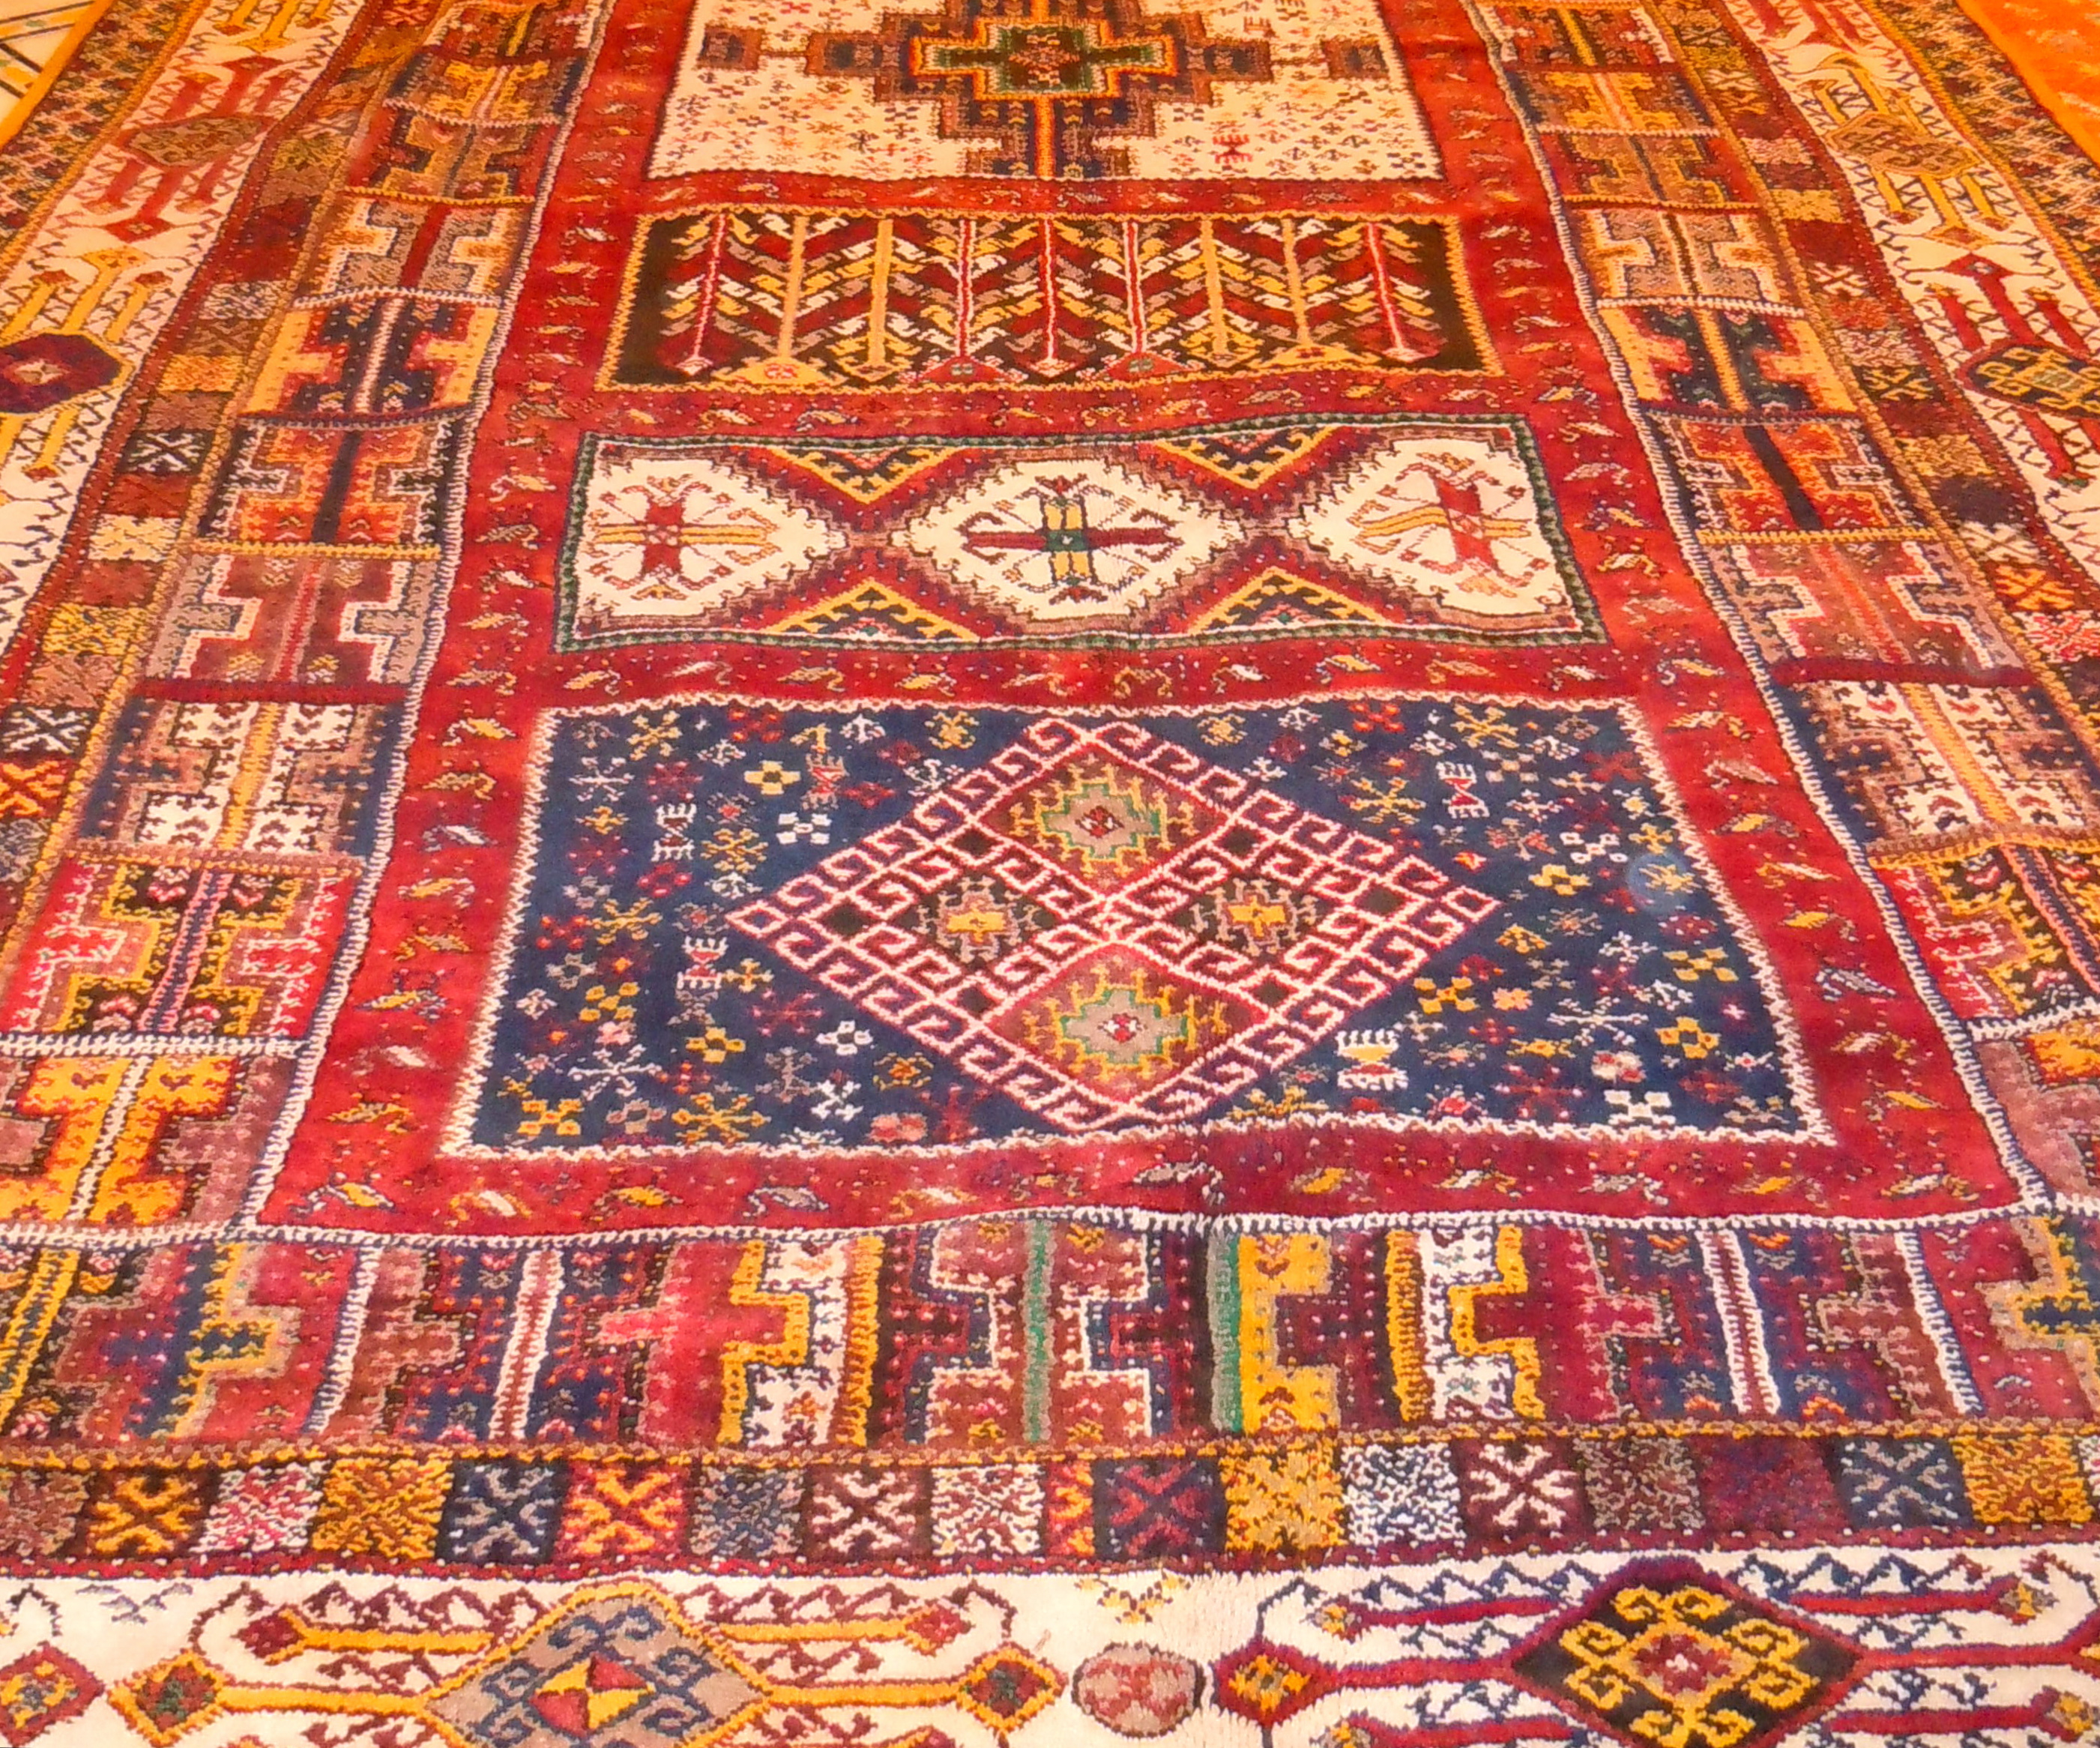 Moroccan Carpets - Travel-Exploration Blog Travel-Exploration Blog